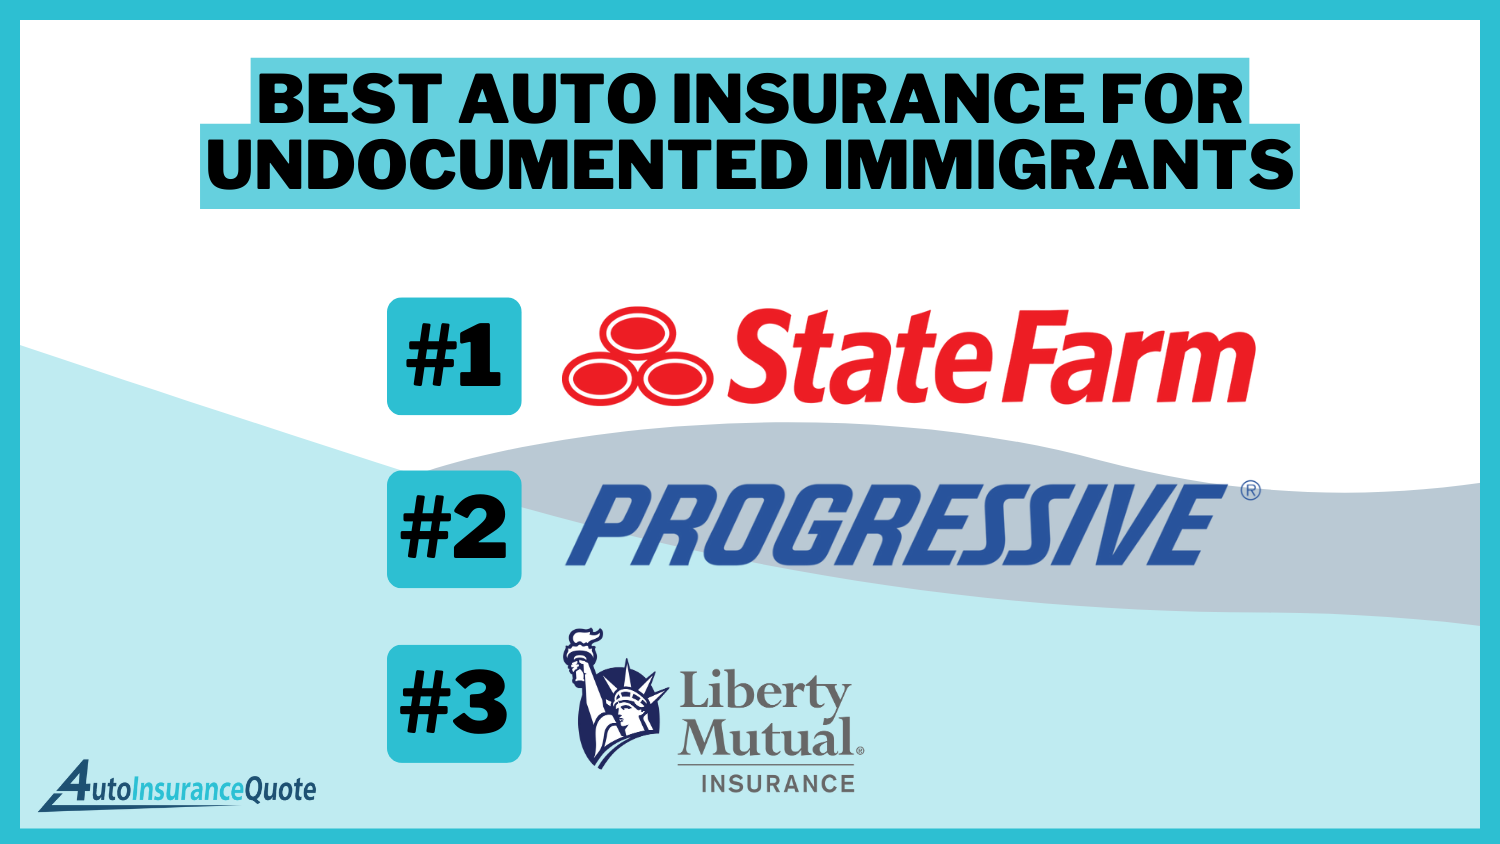 Best Auto Insurance for Undocumented Immigrants: State Farm, Progressive, and Liberty Mutual